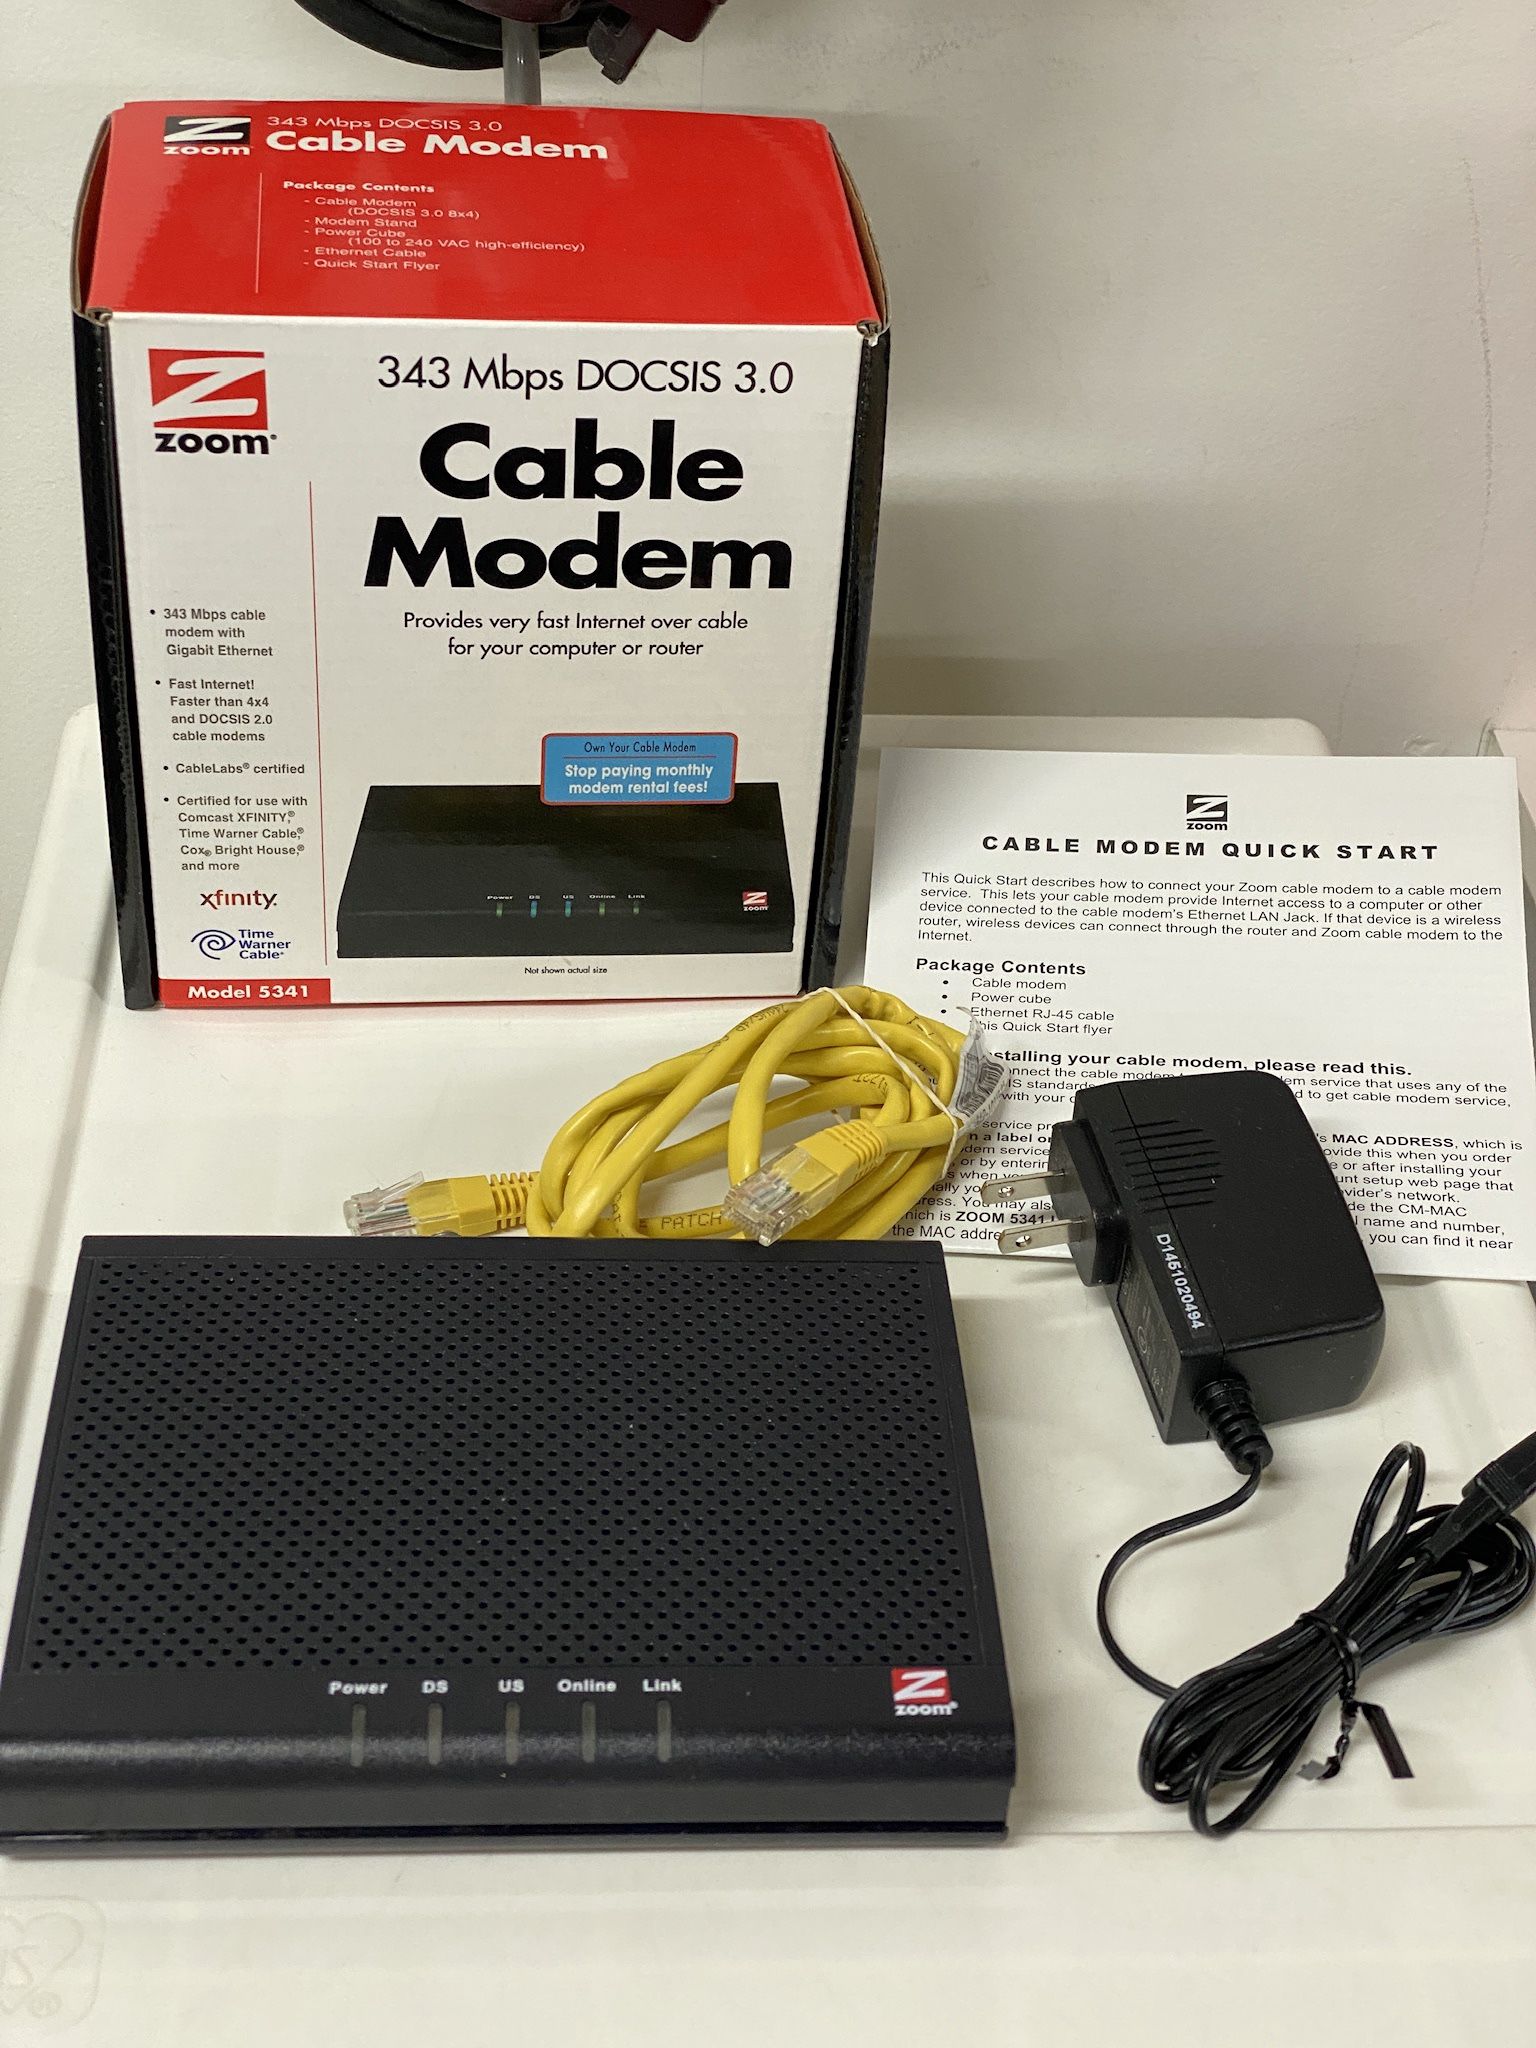 Zoom Cable Modem Model 5341 343 Mbps 5341J DOCSIS 3.0 5341-00-03J